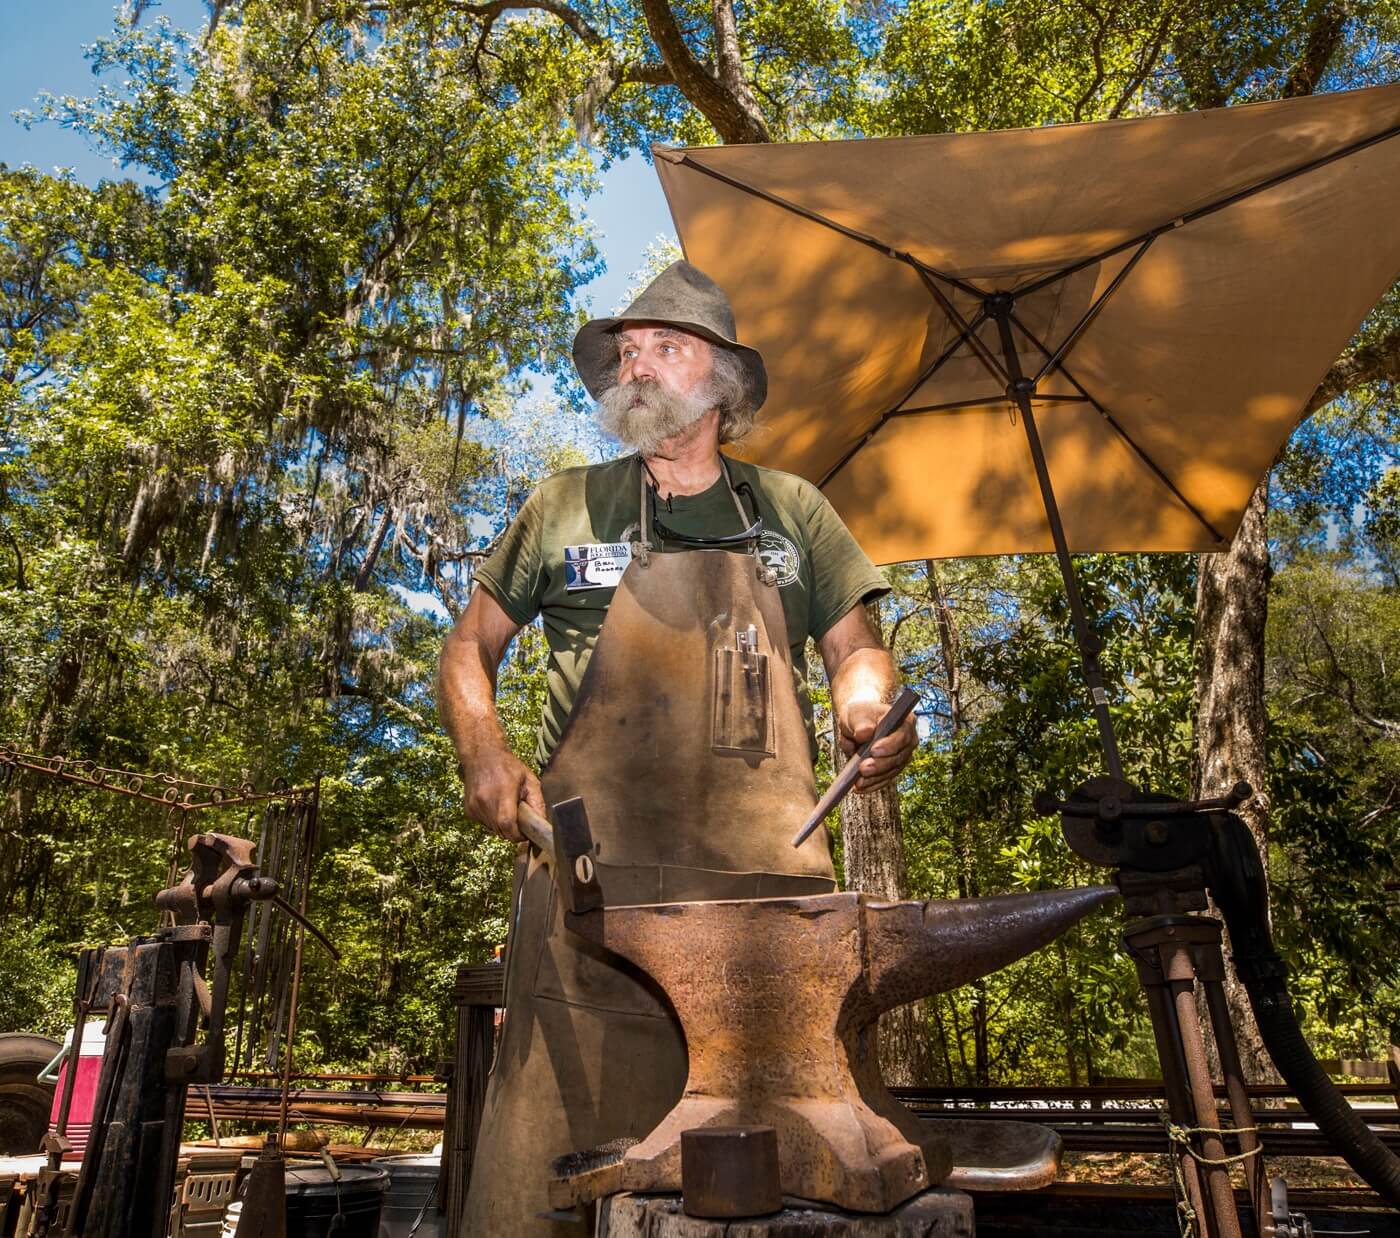 Florida Folklife demonstrations include heritage arts including blacksmithing.